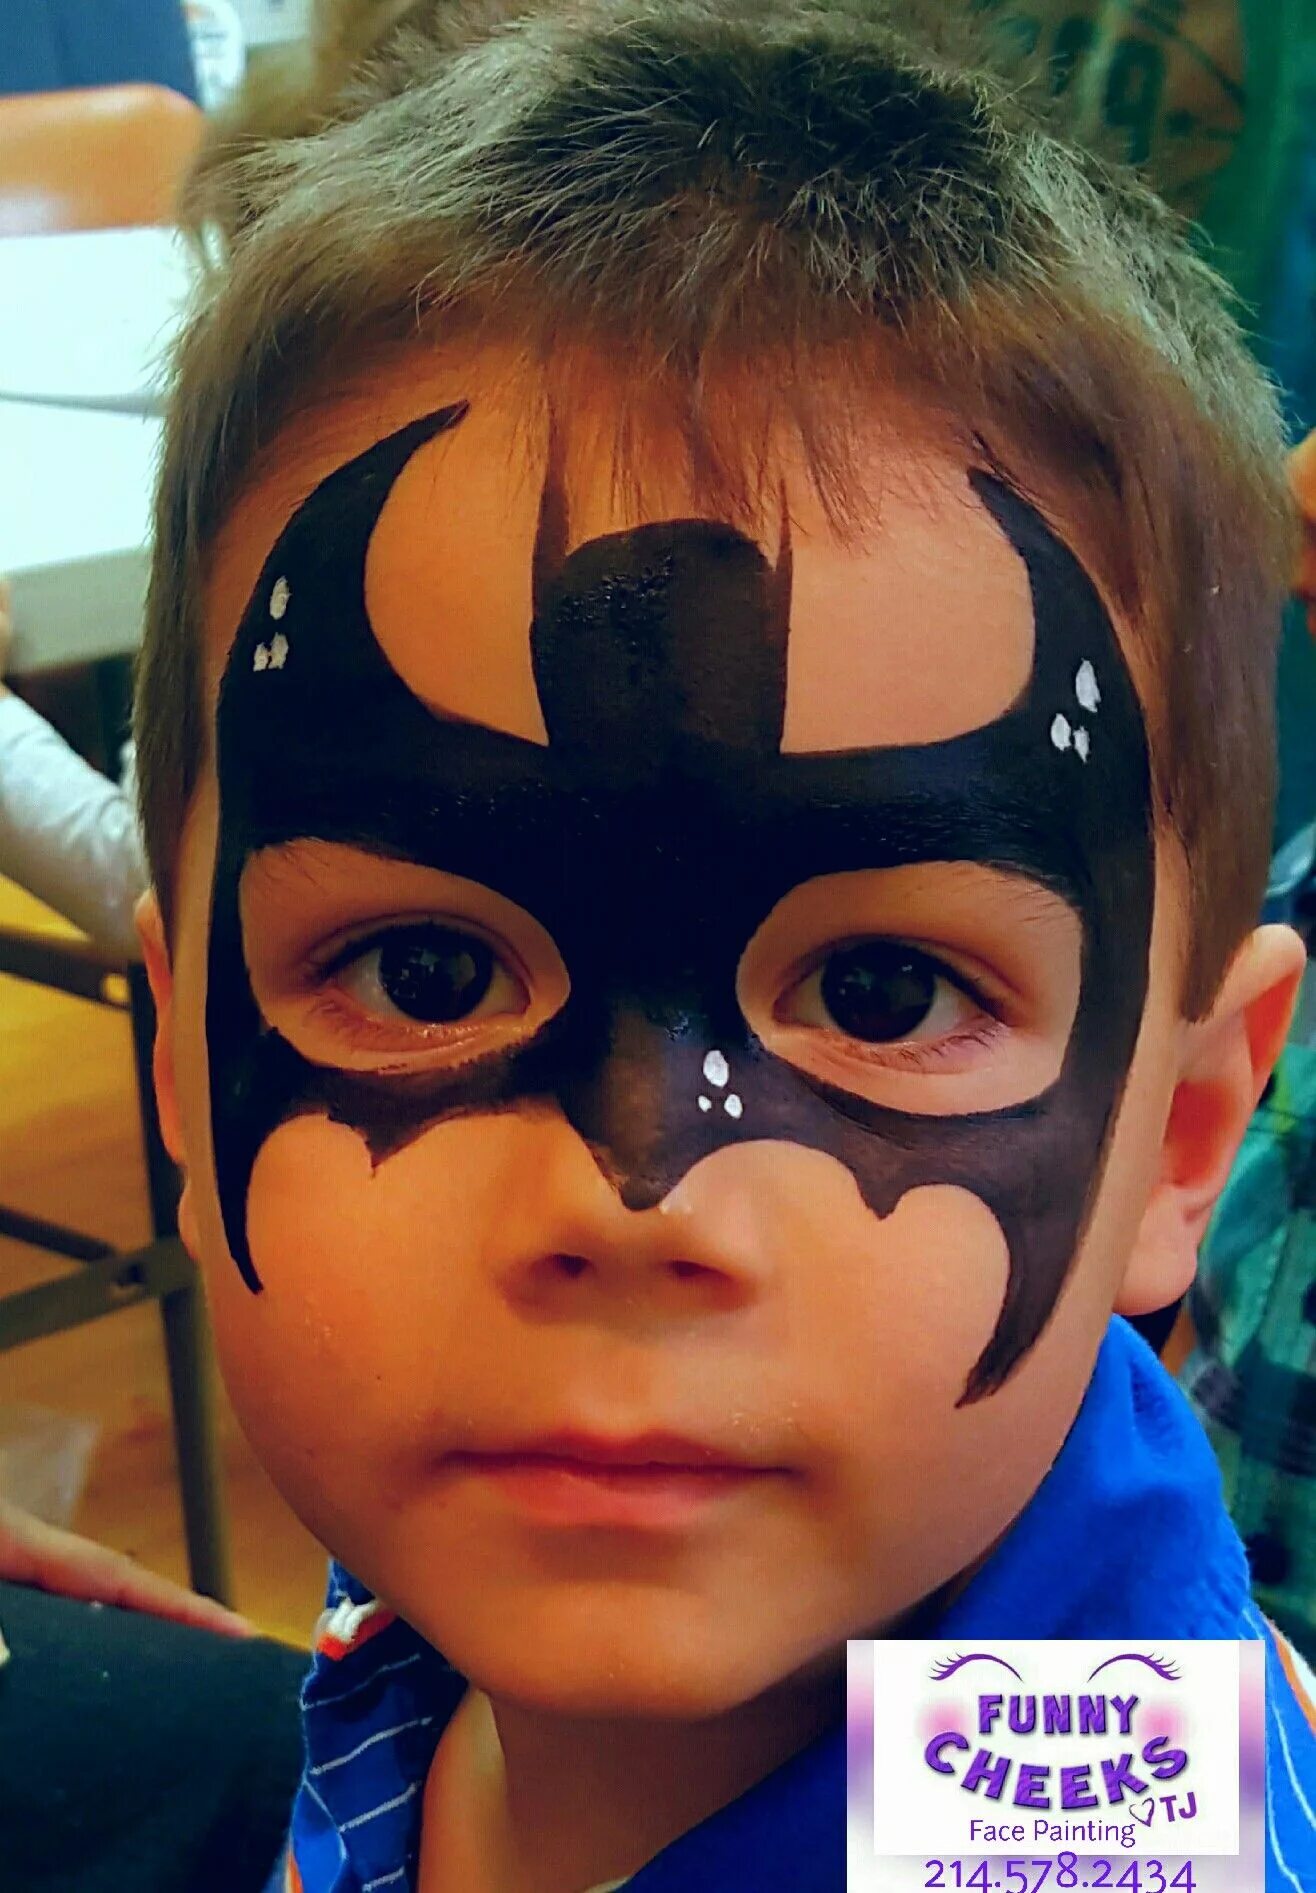 Аквагрим Бэтмен для детей. Бэтмен аквагрим на лице. Маска Бэтмена аквагрим. Бэтмен грим для детей.